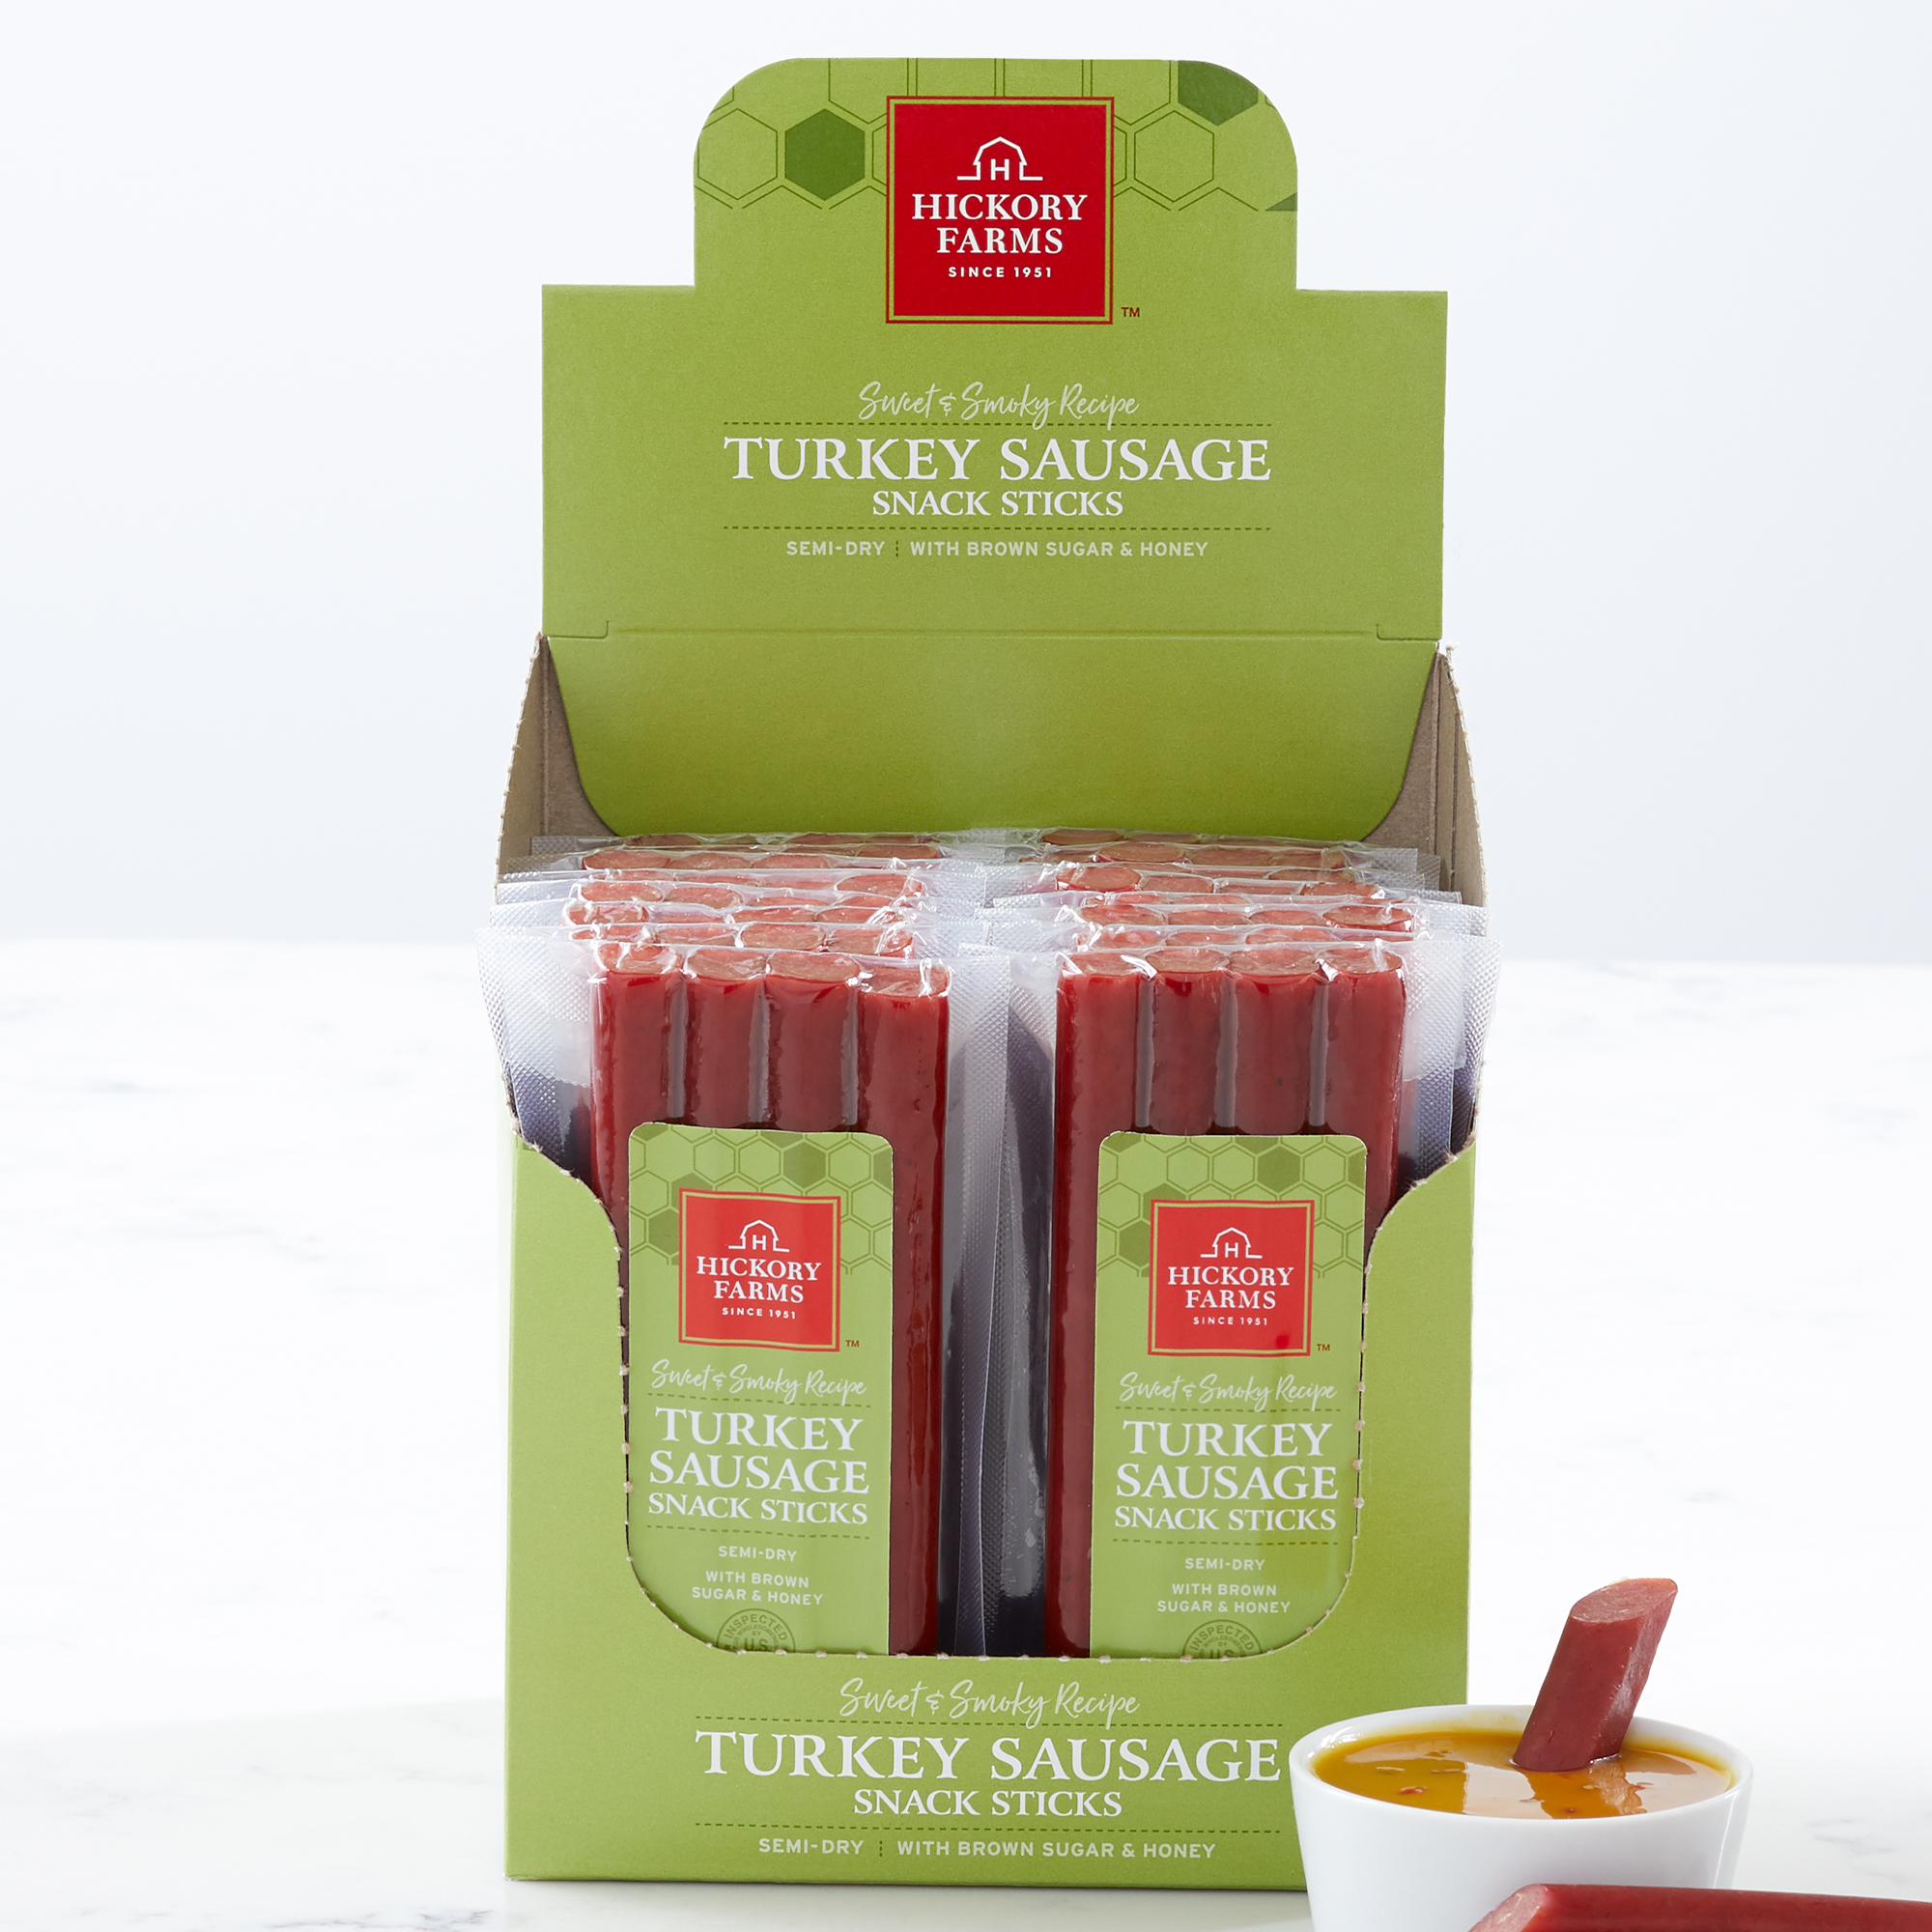 Savory Turkey Summer Sausage - 29.99 USD | Hickory Farms